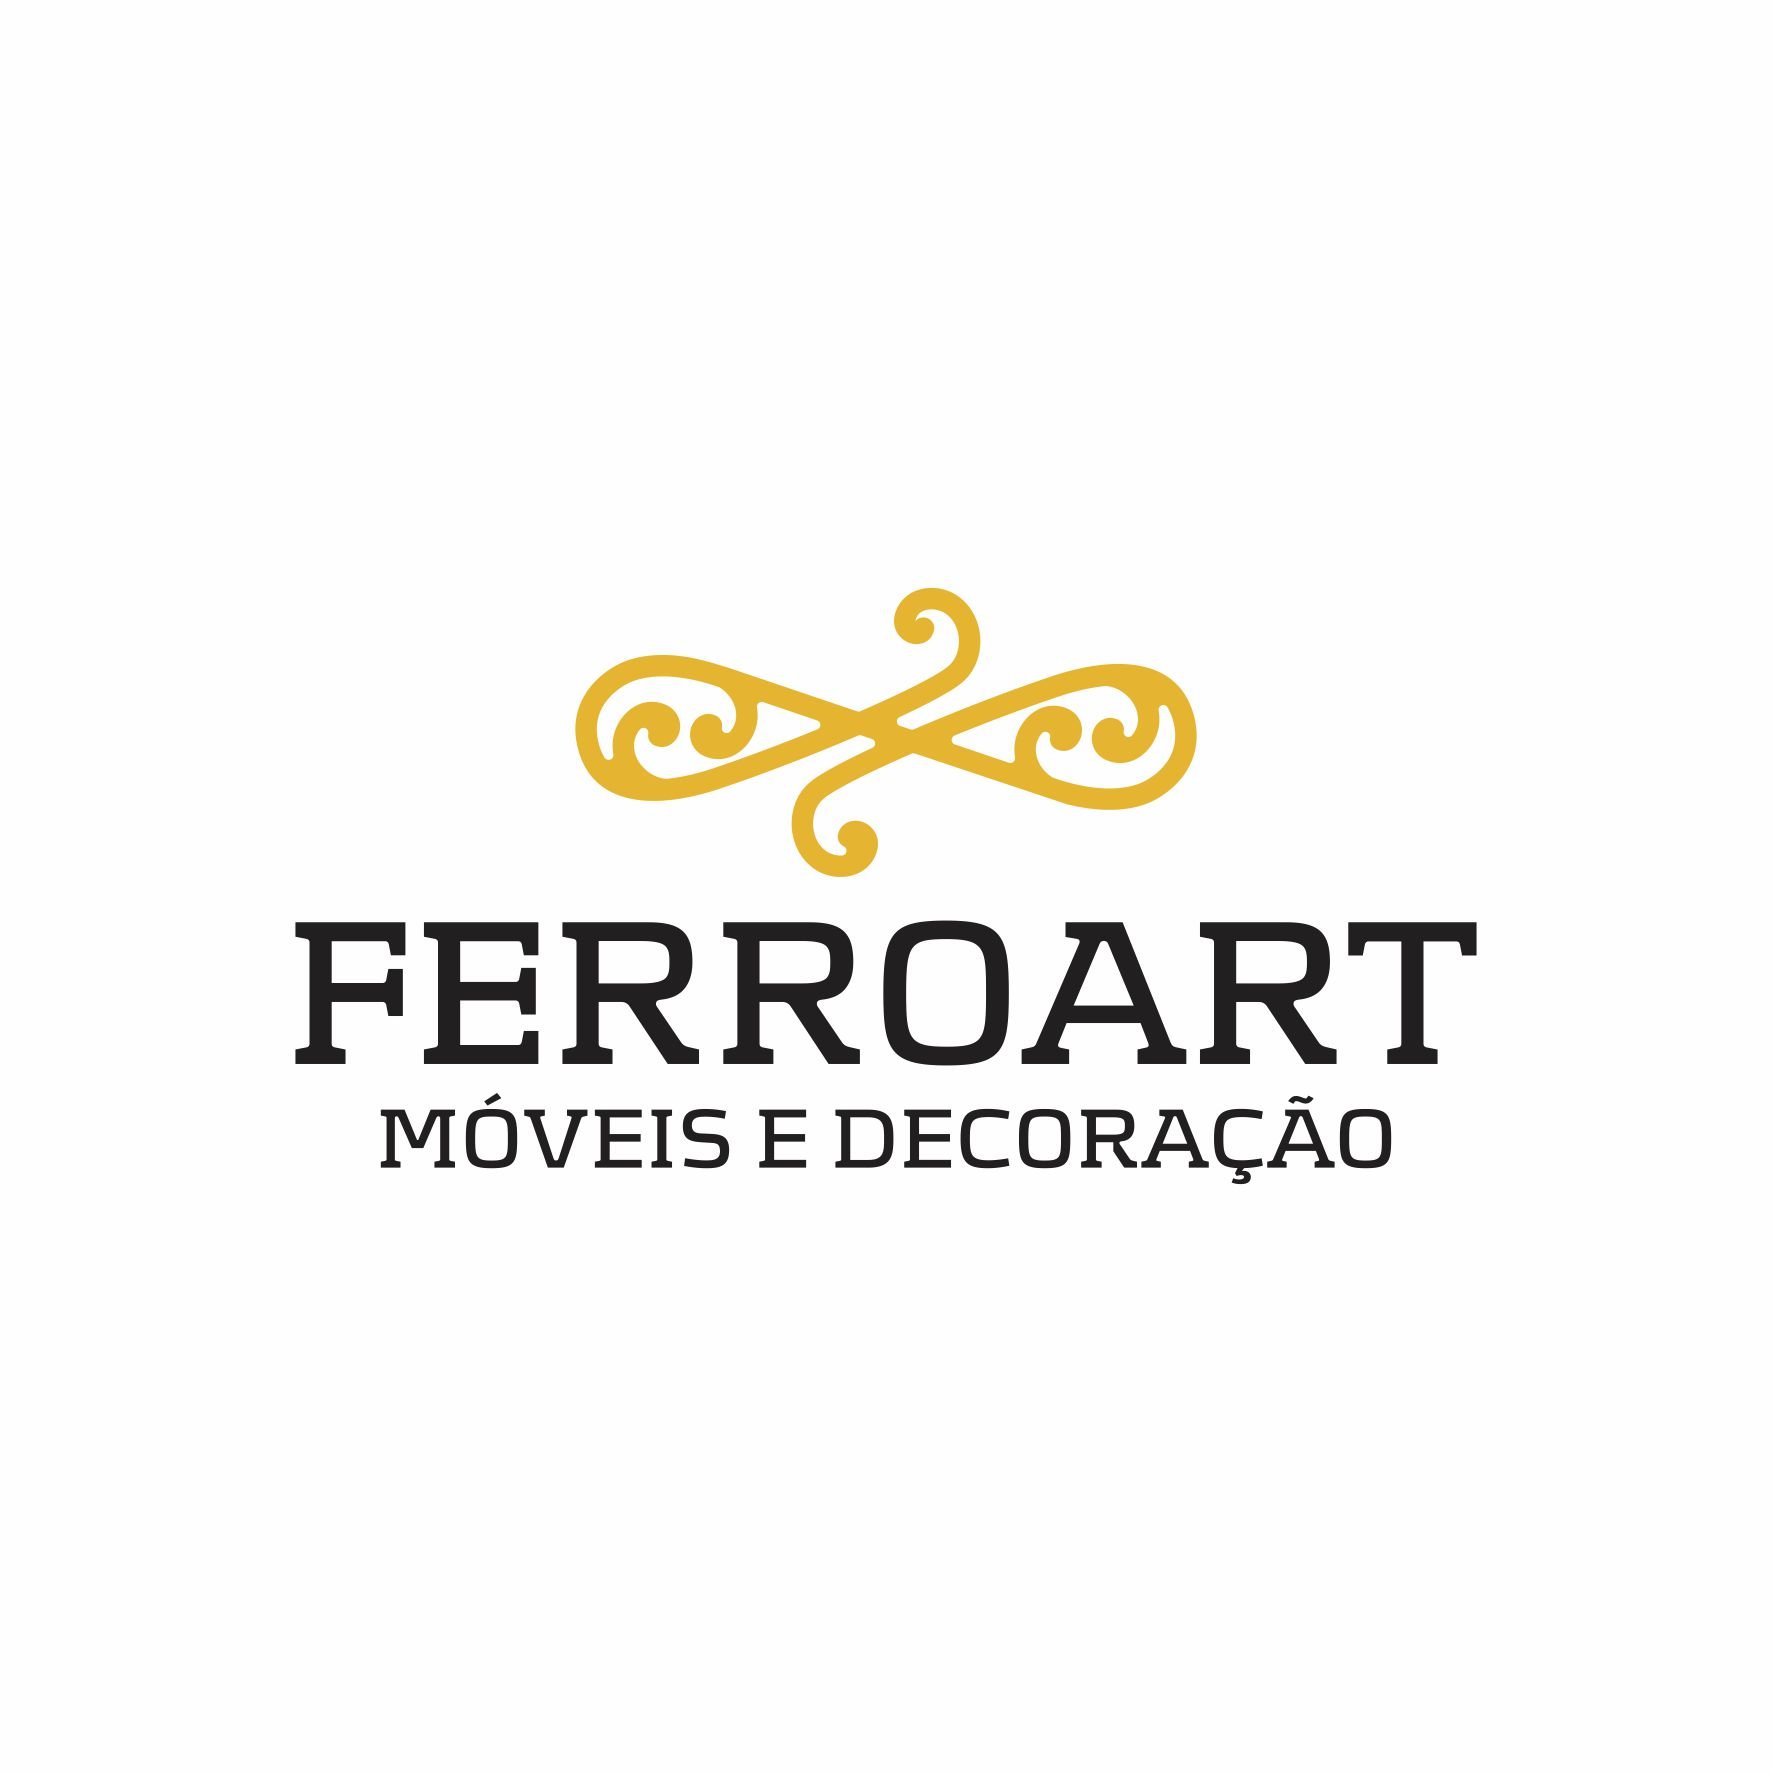 ferroart-moveis-decoracao-01